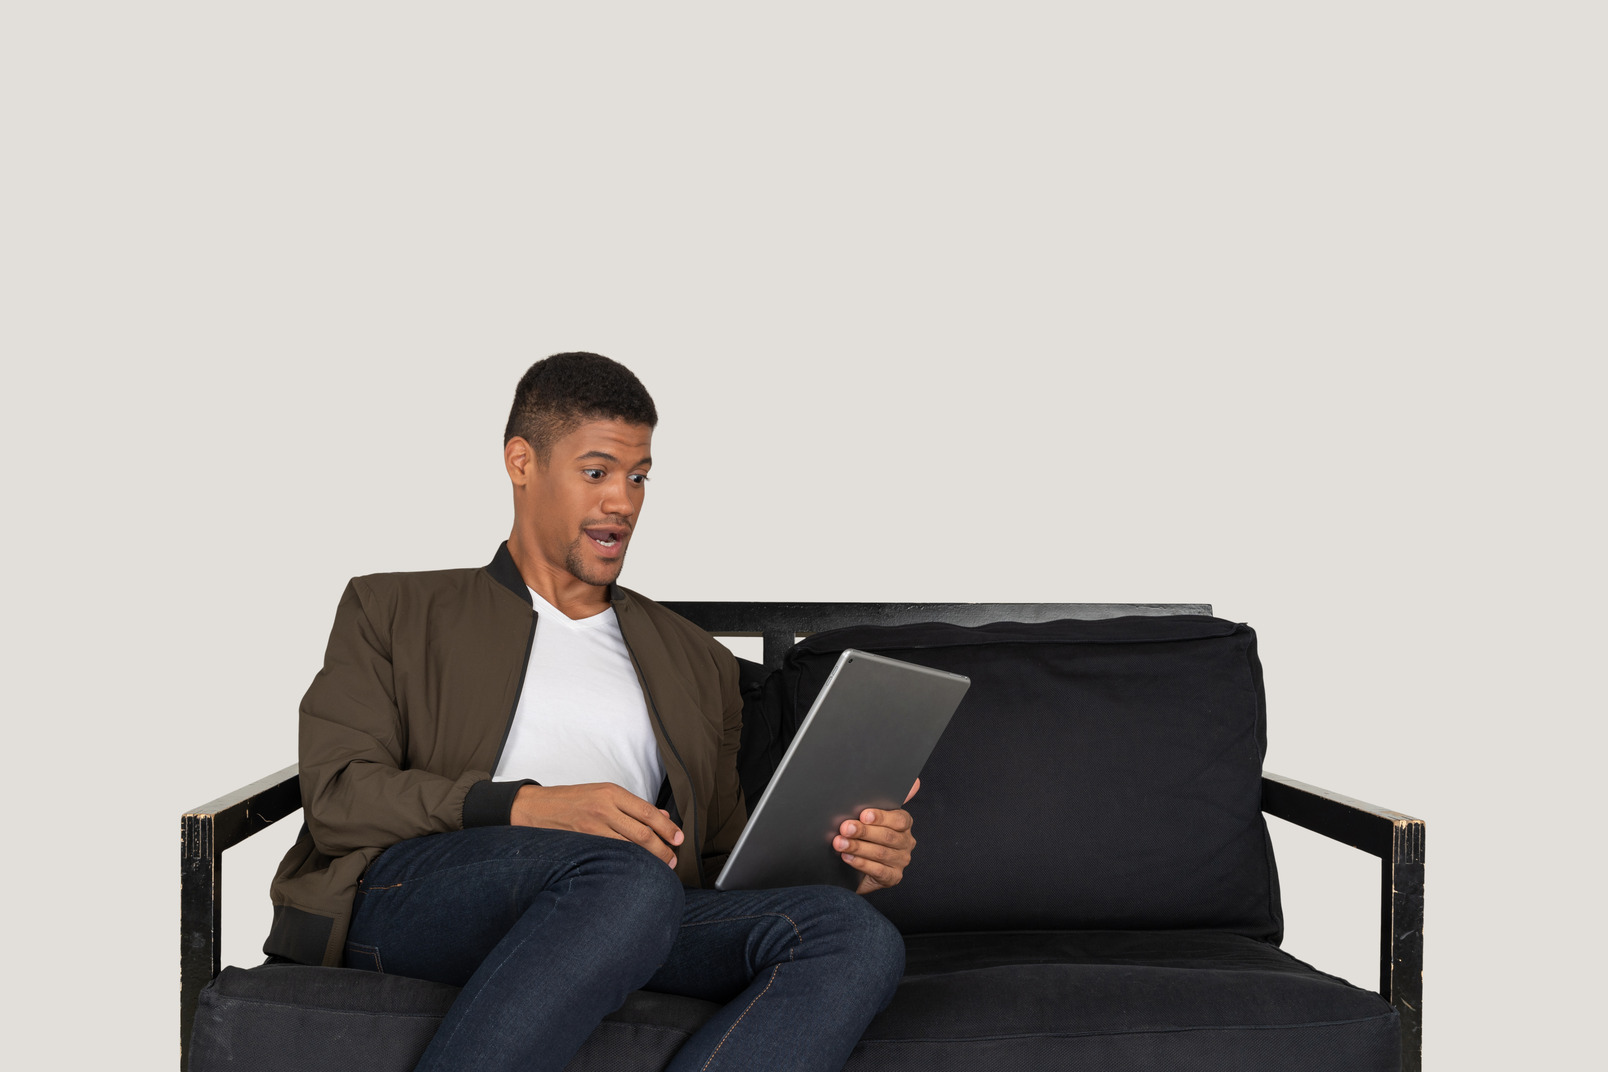 Карибидис харламов на диване с планшетом